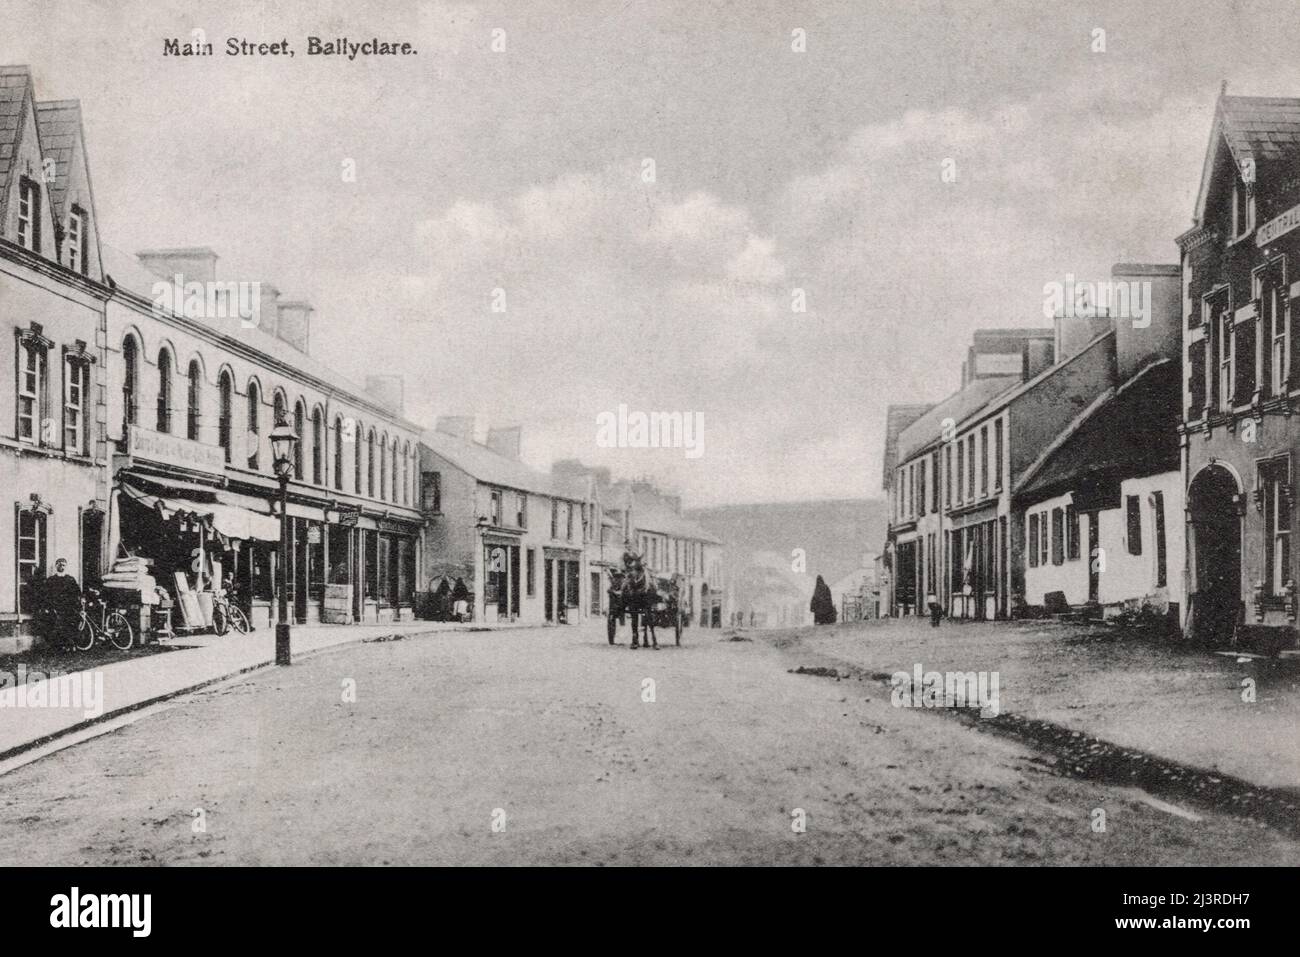 Main Street, Ballyclare Ireland, c1906 postcard. unknown photographer Stock Photo